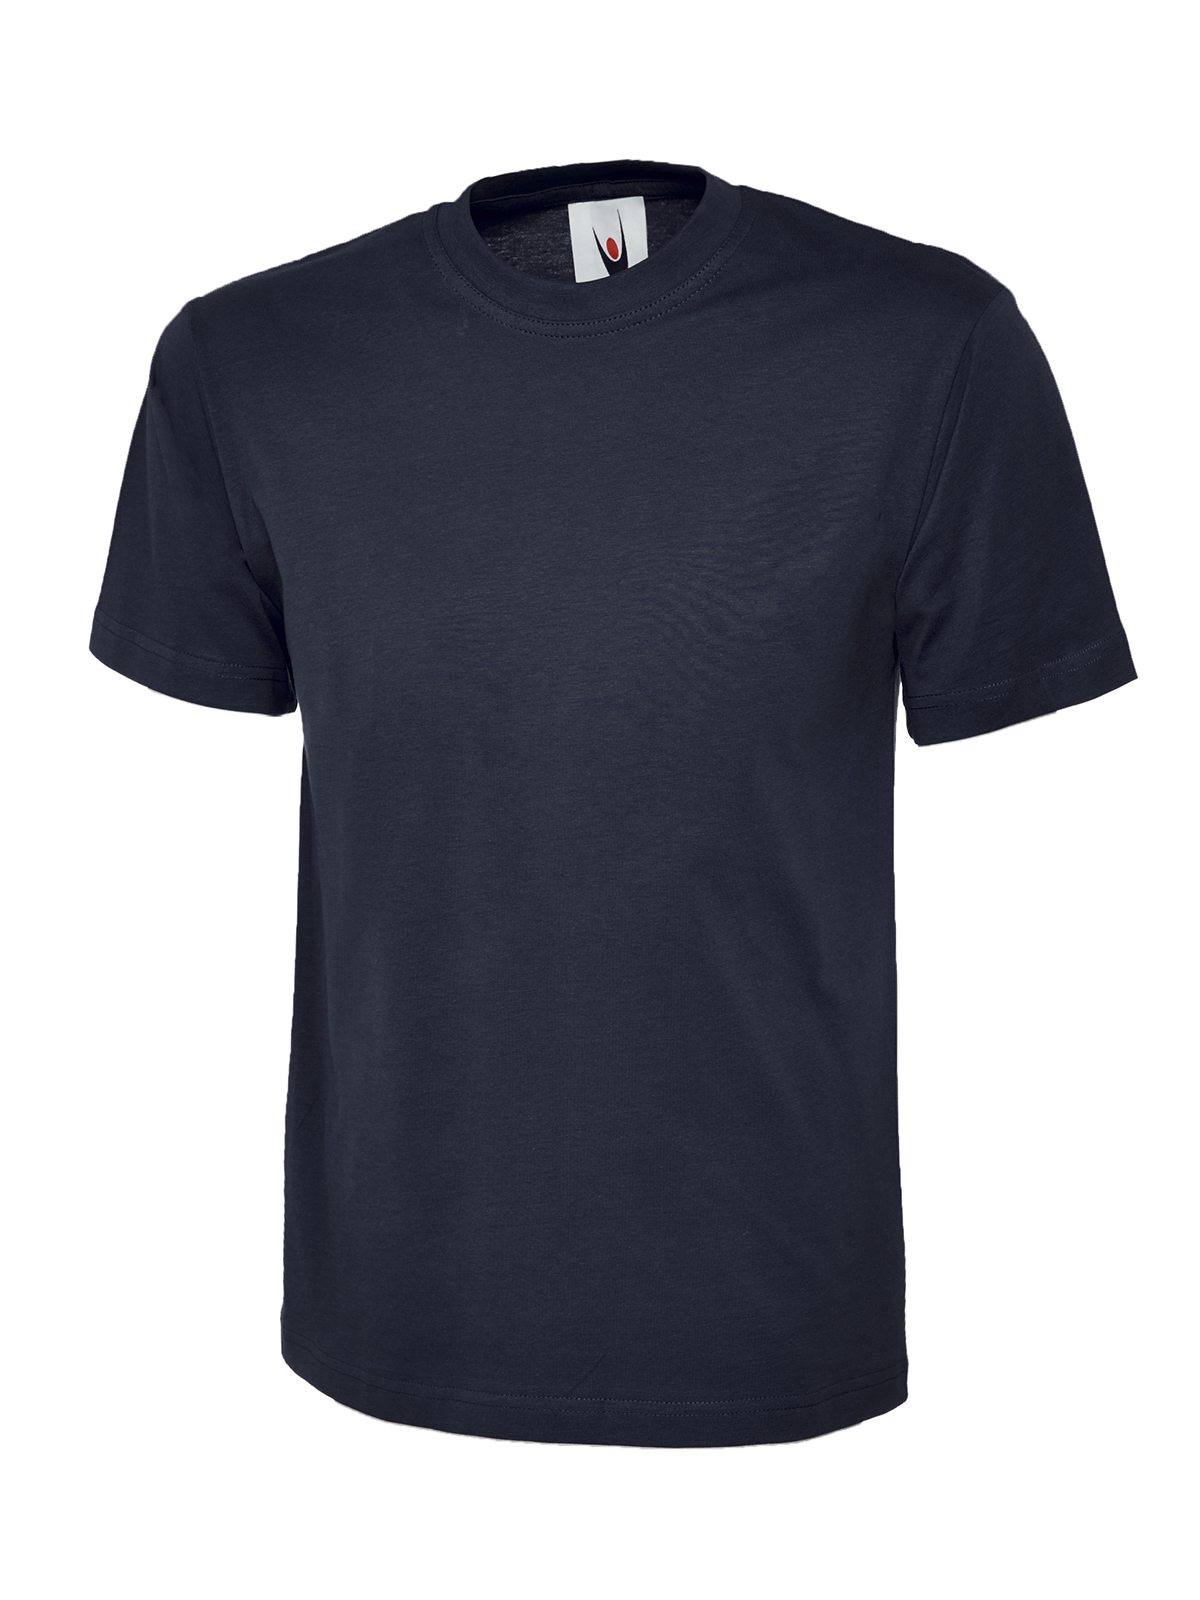 T-shirt, Navy - Size 5XL